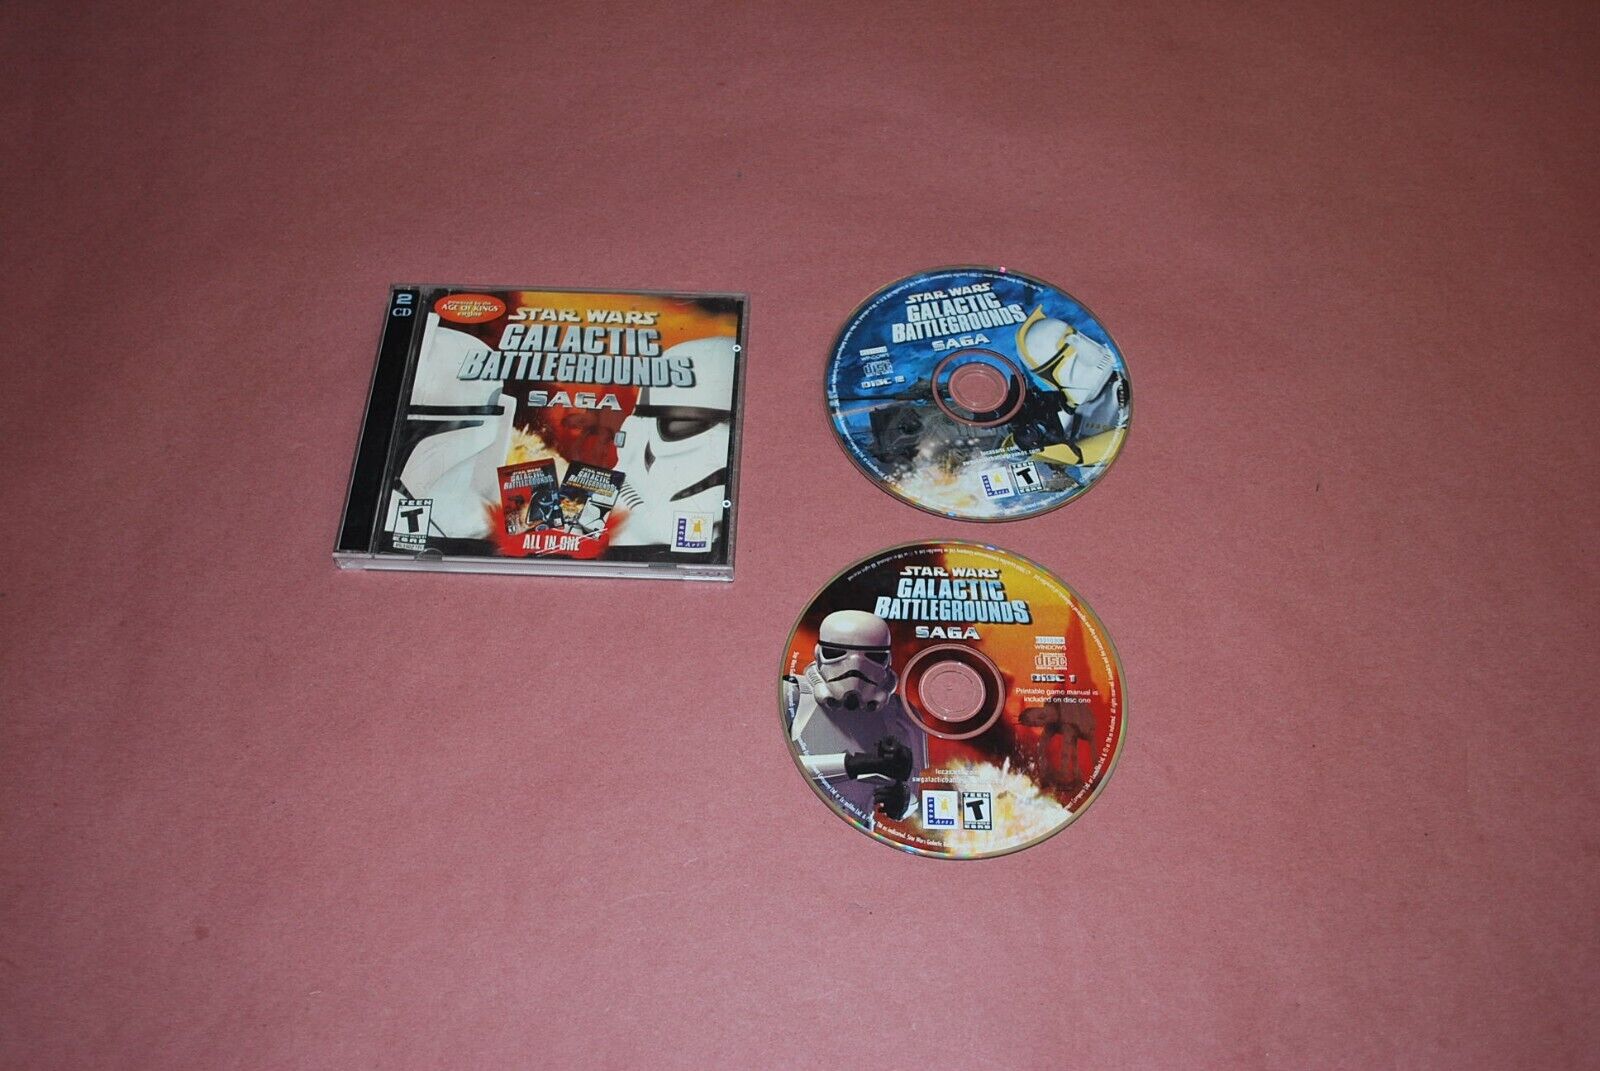 Star Wars Galactic Battlegrounds Saga (PC, 2002) CD-ROM Game 2 discs